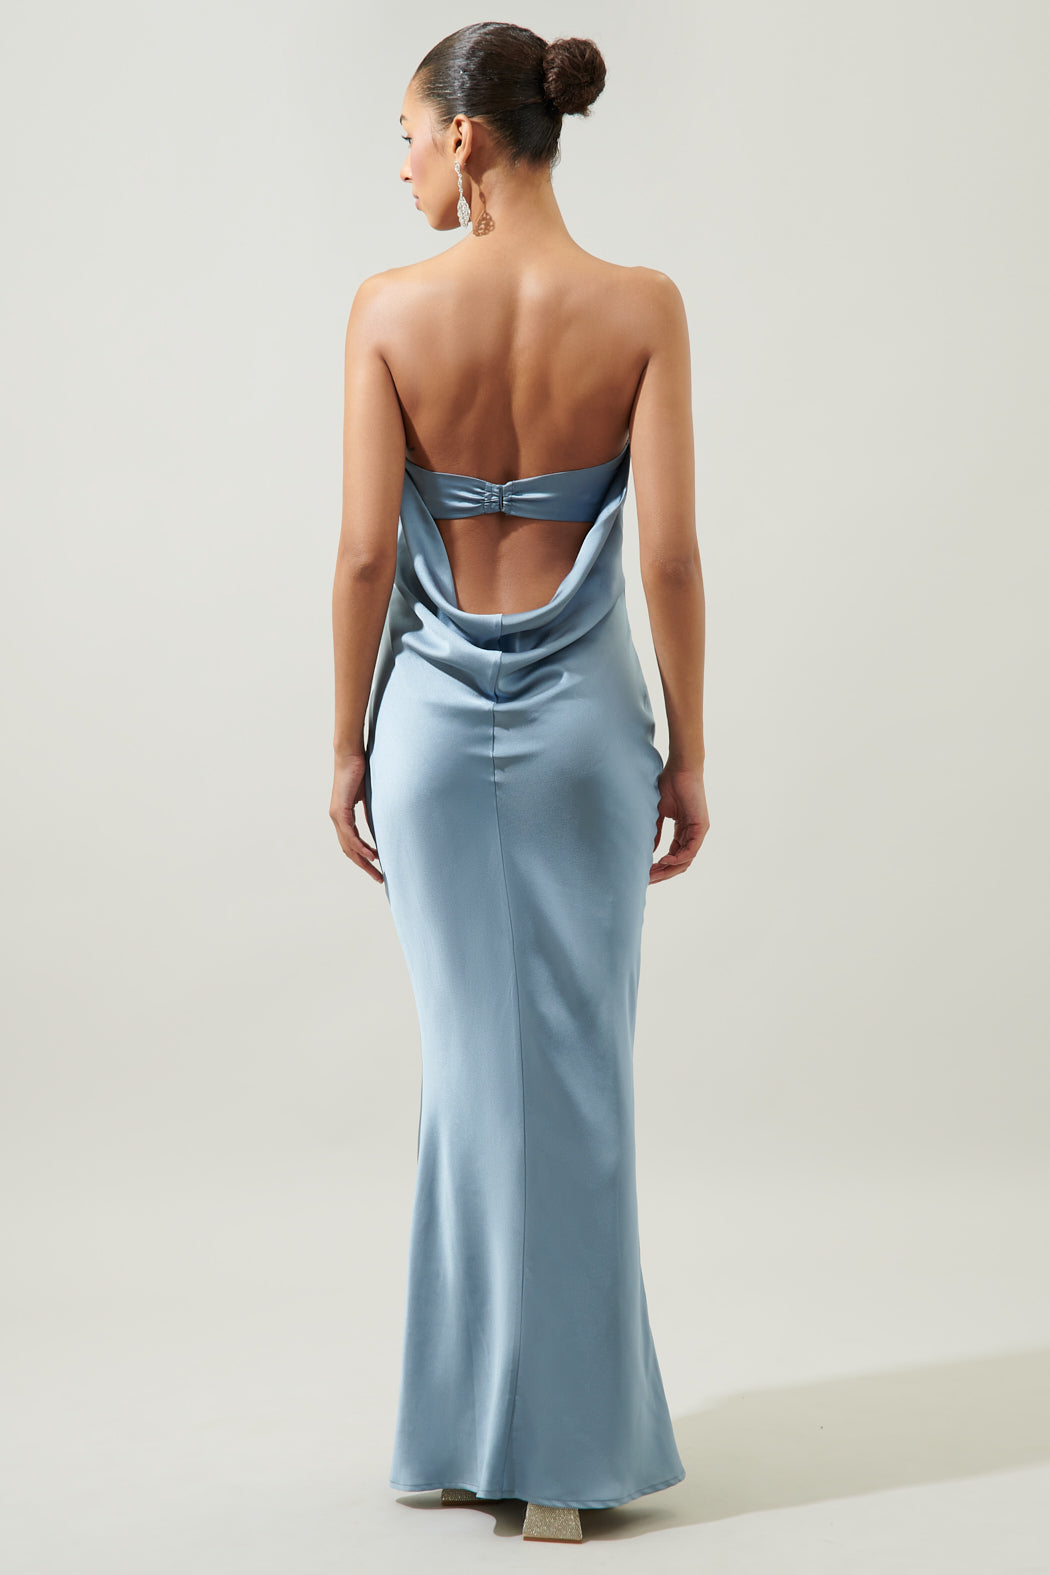 Realtix Satin Silk Backless Tube Tops Maxi Dress for Women Low